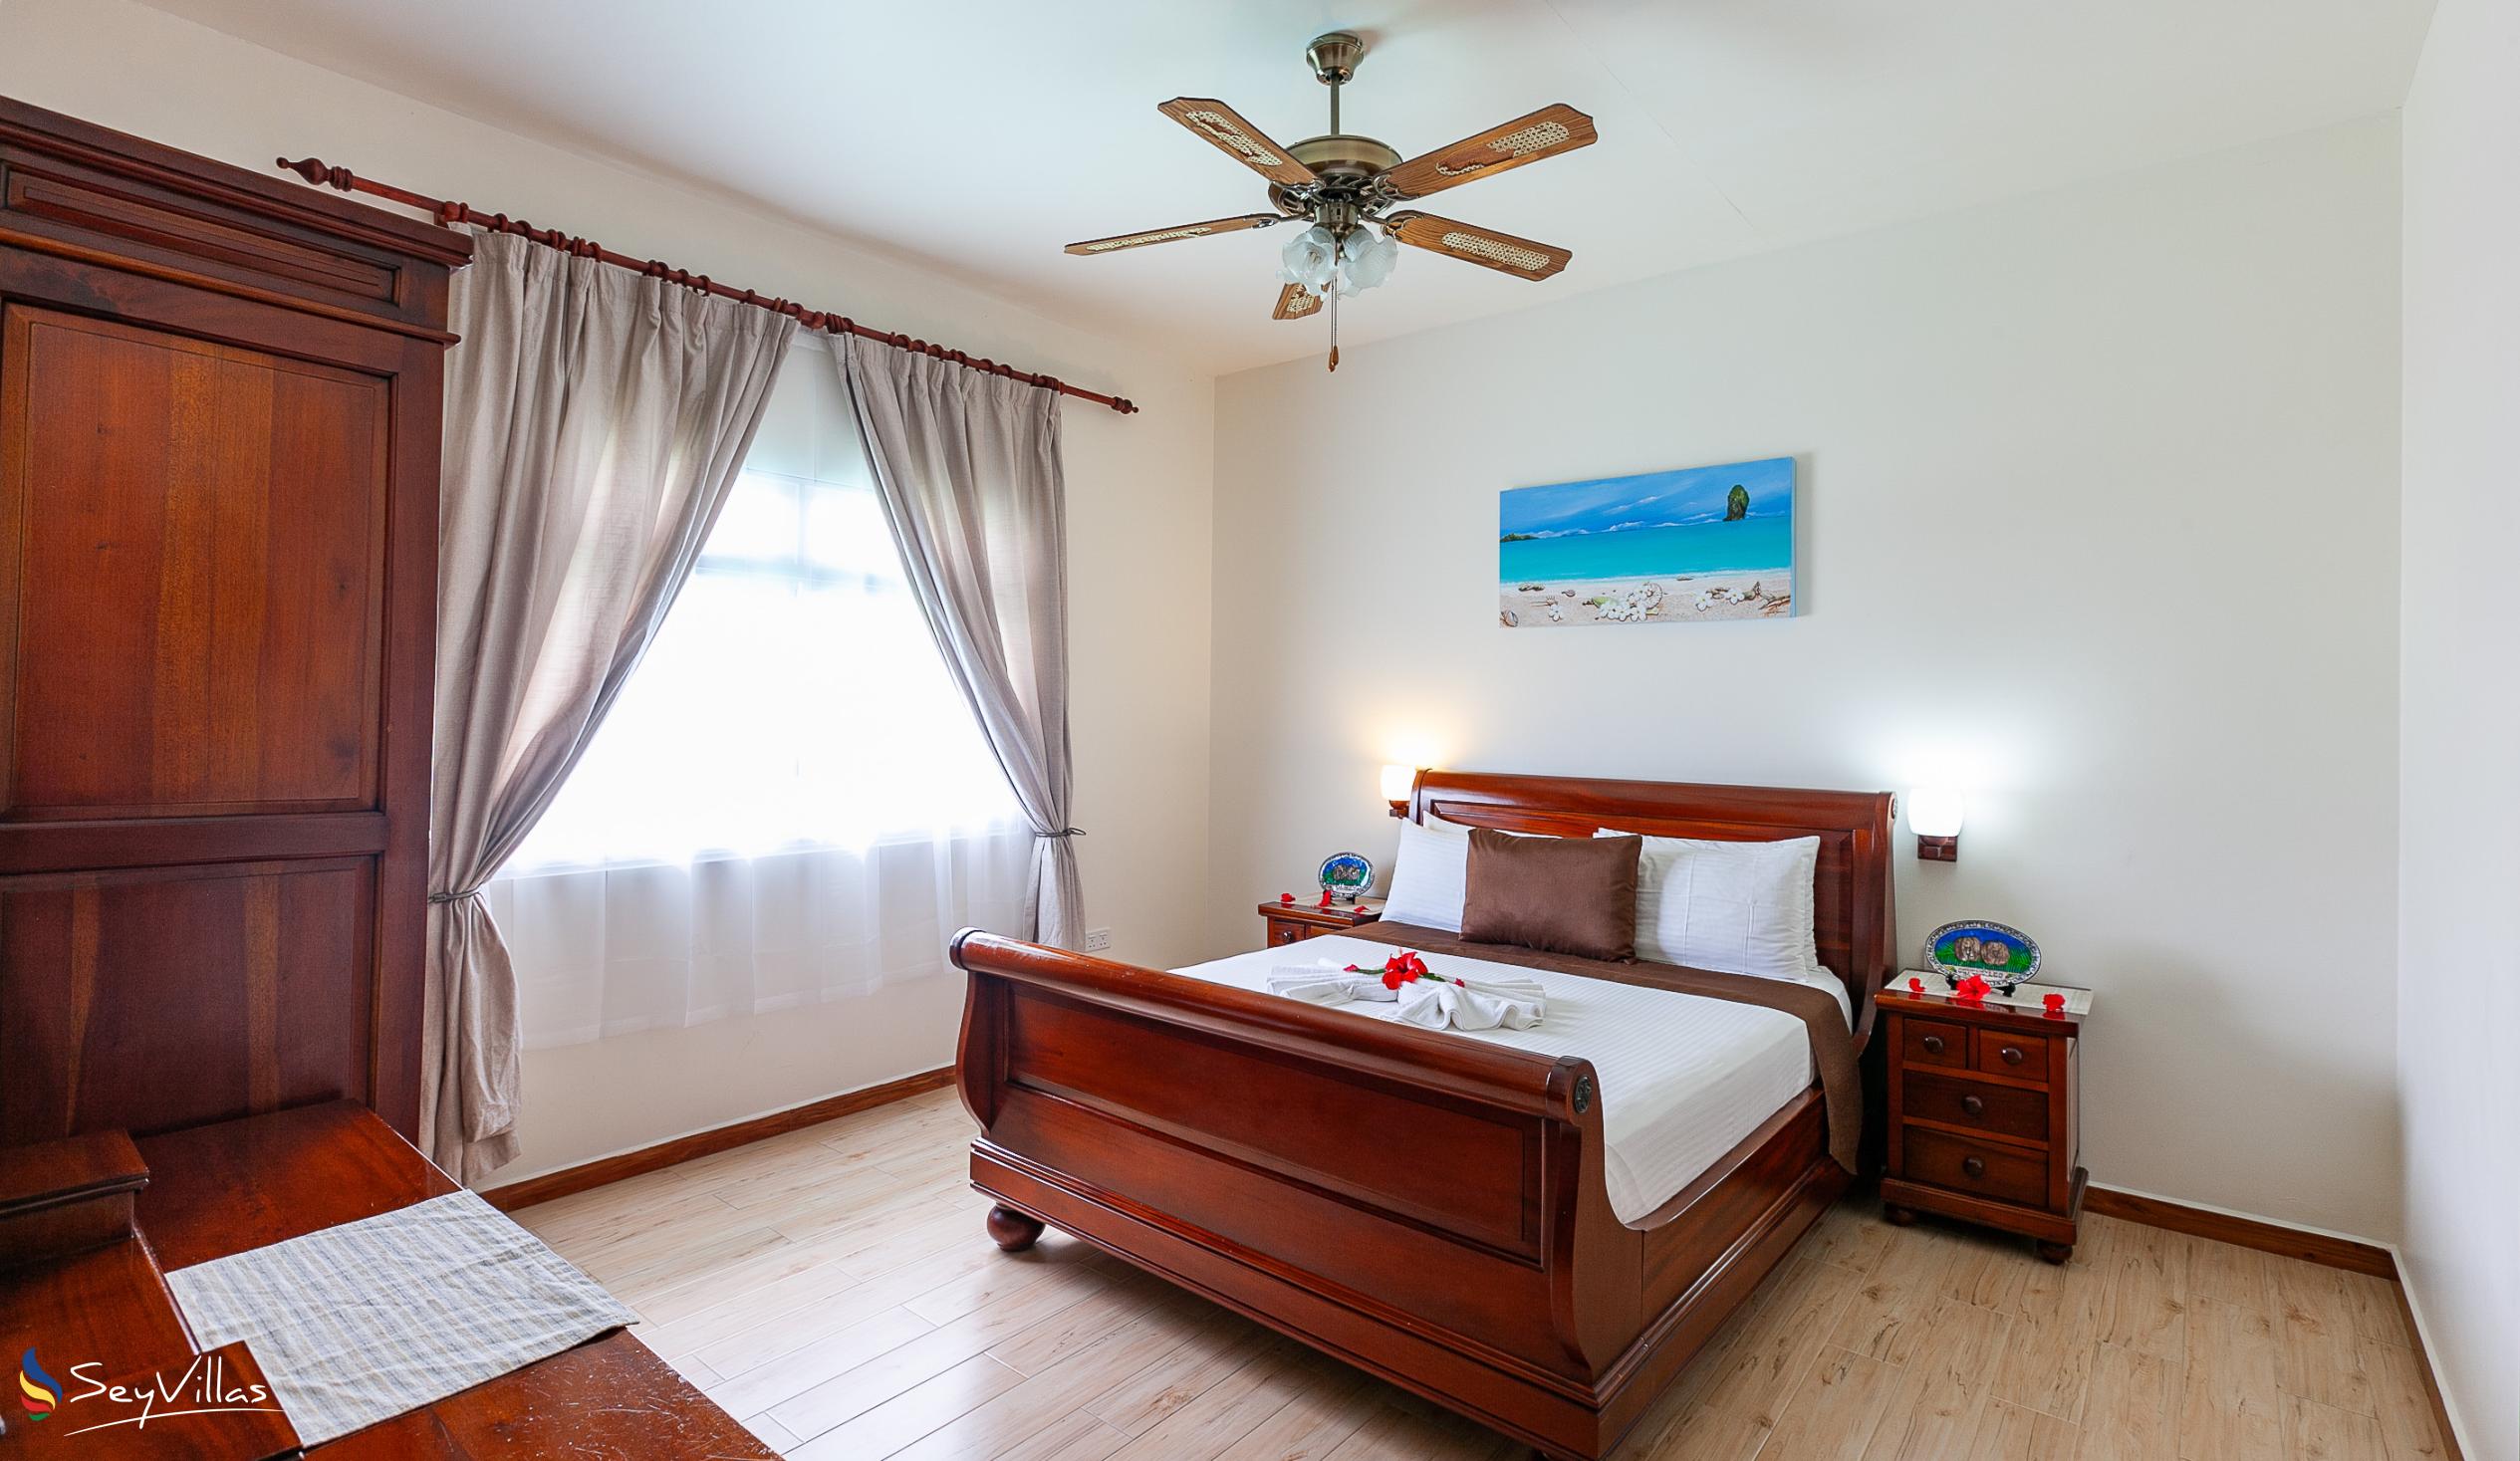 Foto 55: Seashell Beach Villa - Appartement 2 chambres - Praslin (Seychelles)